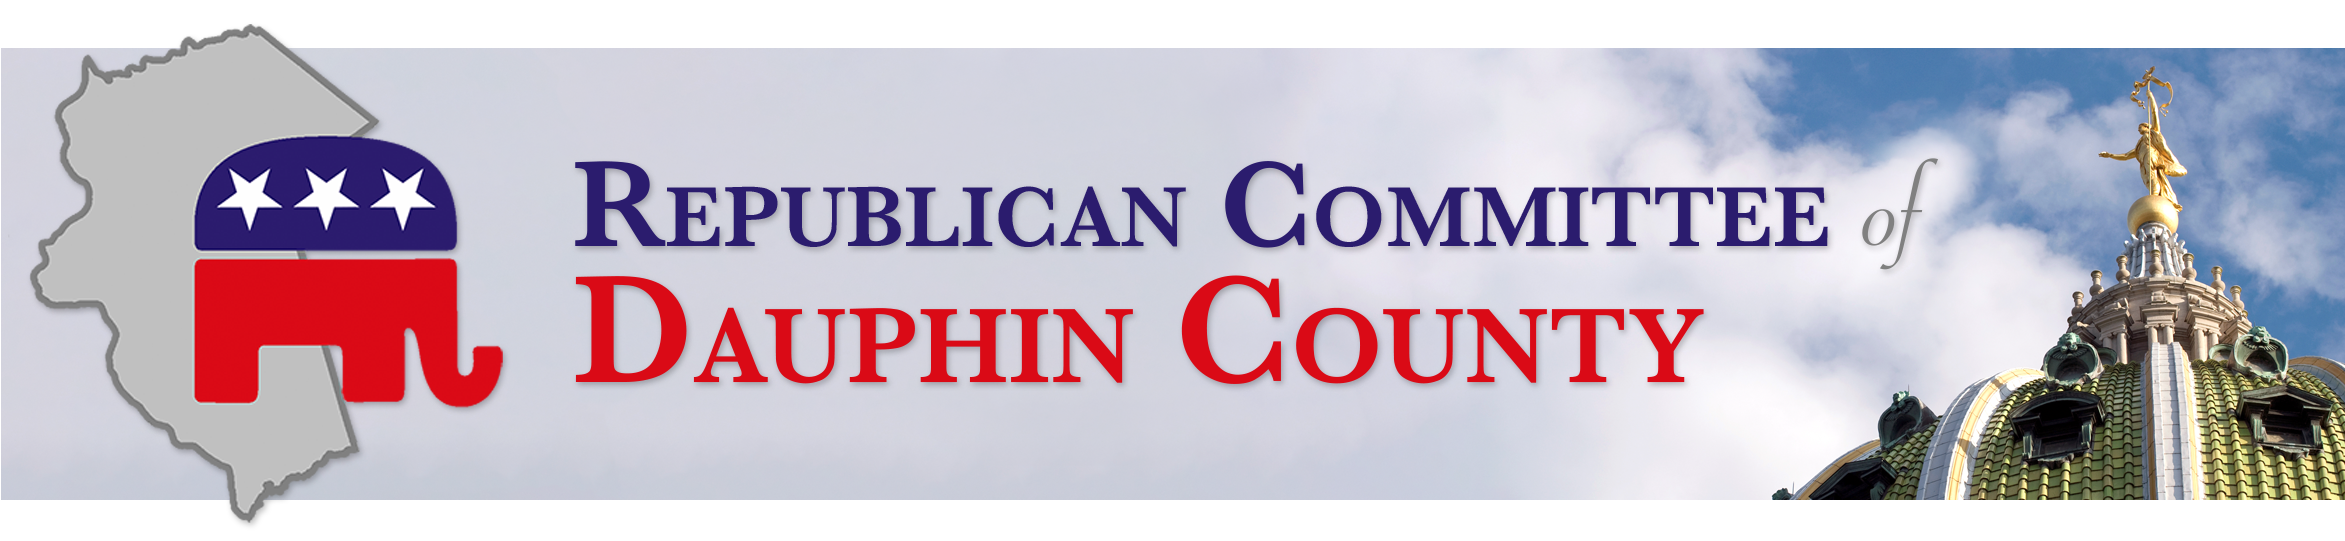 Dauphin County Republican Committee